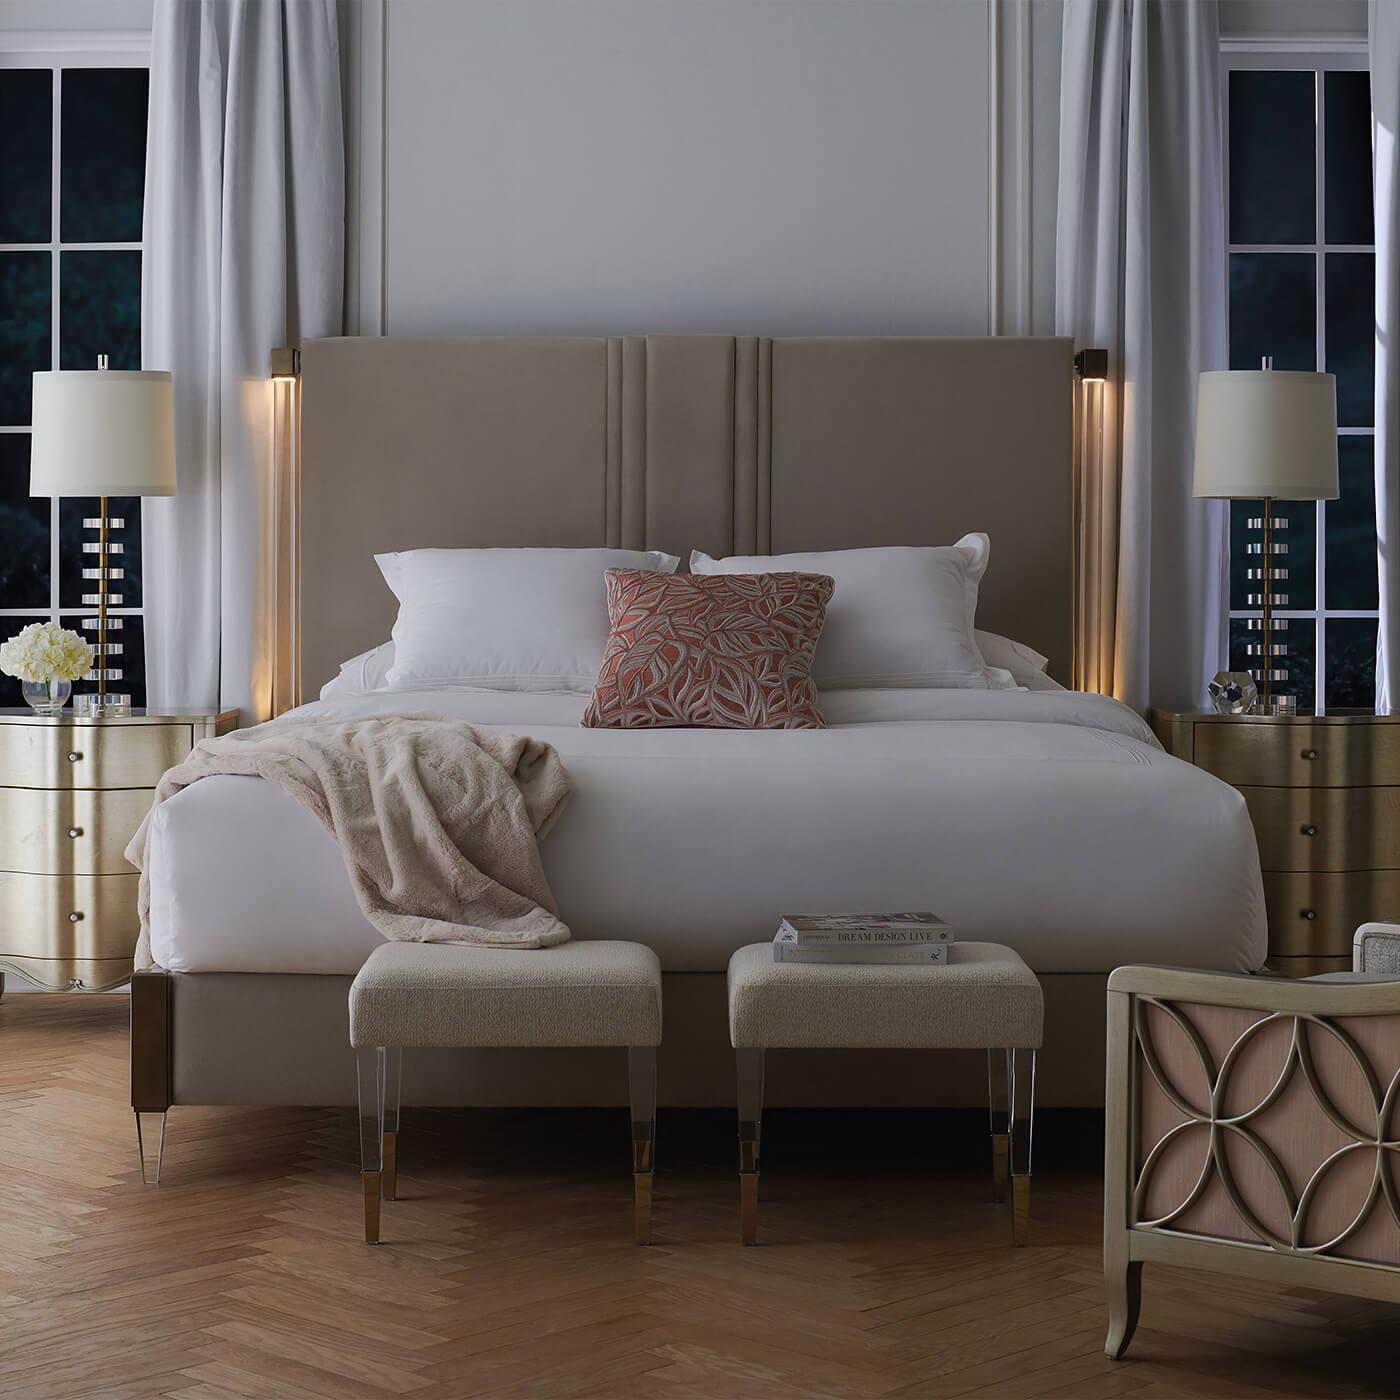 lucite bedroom furniture